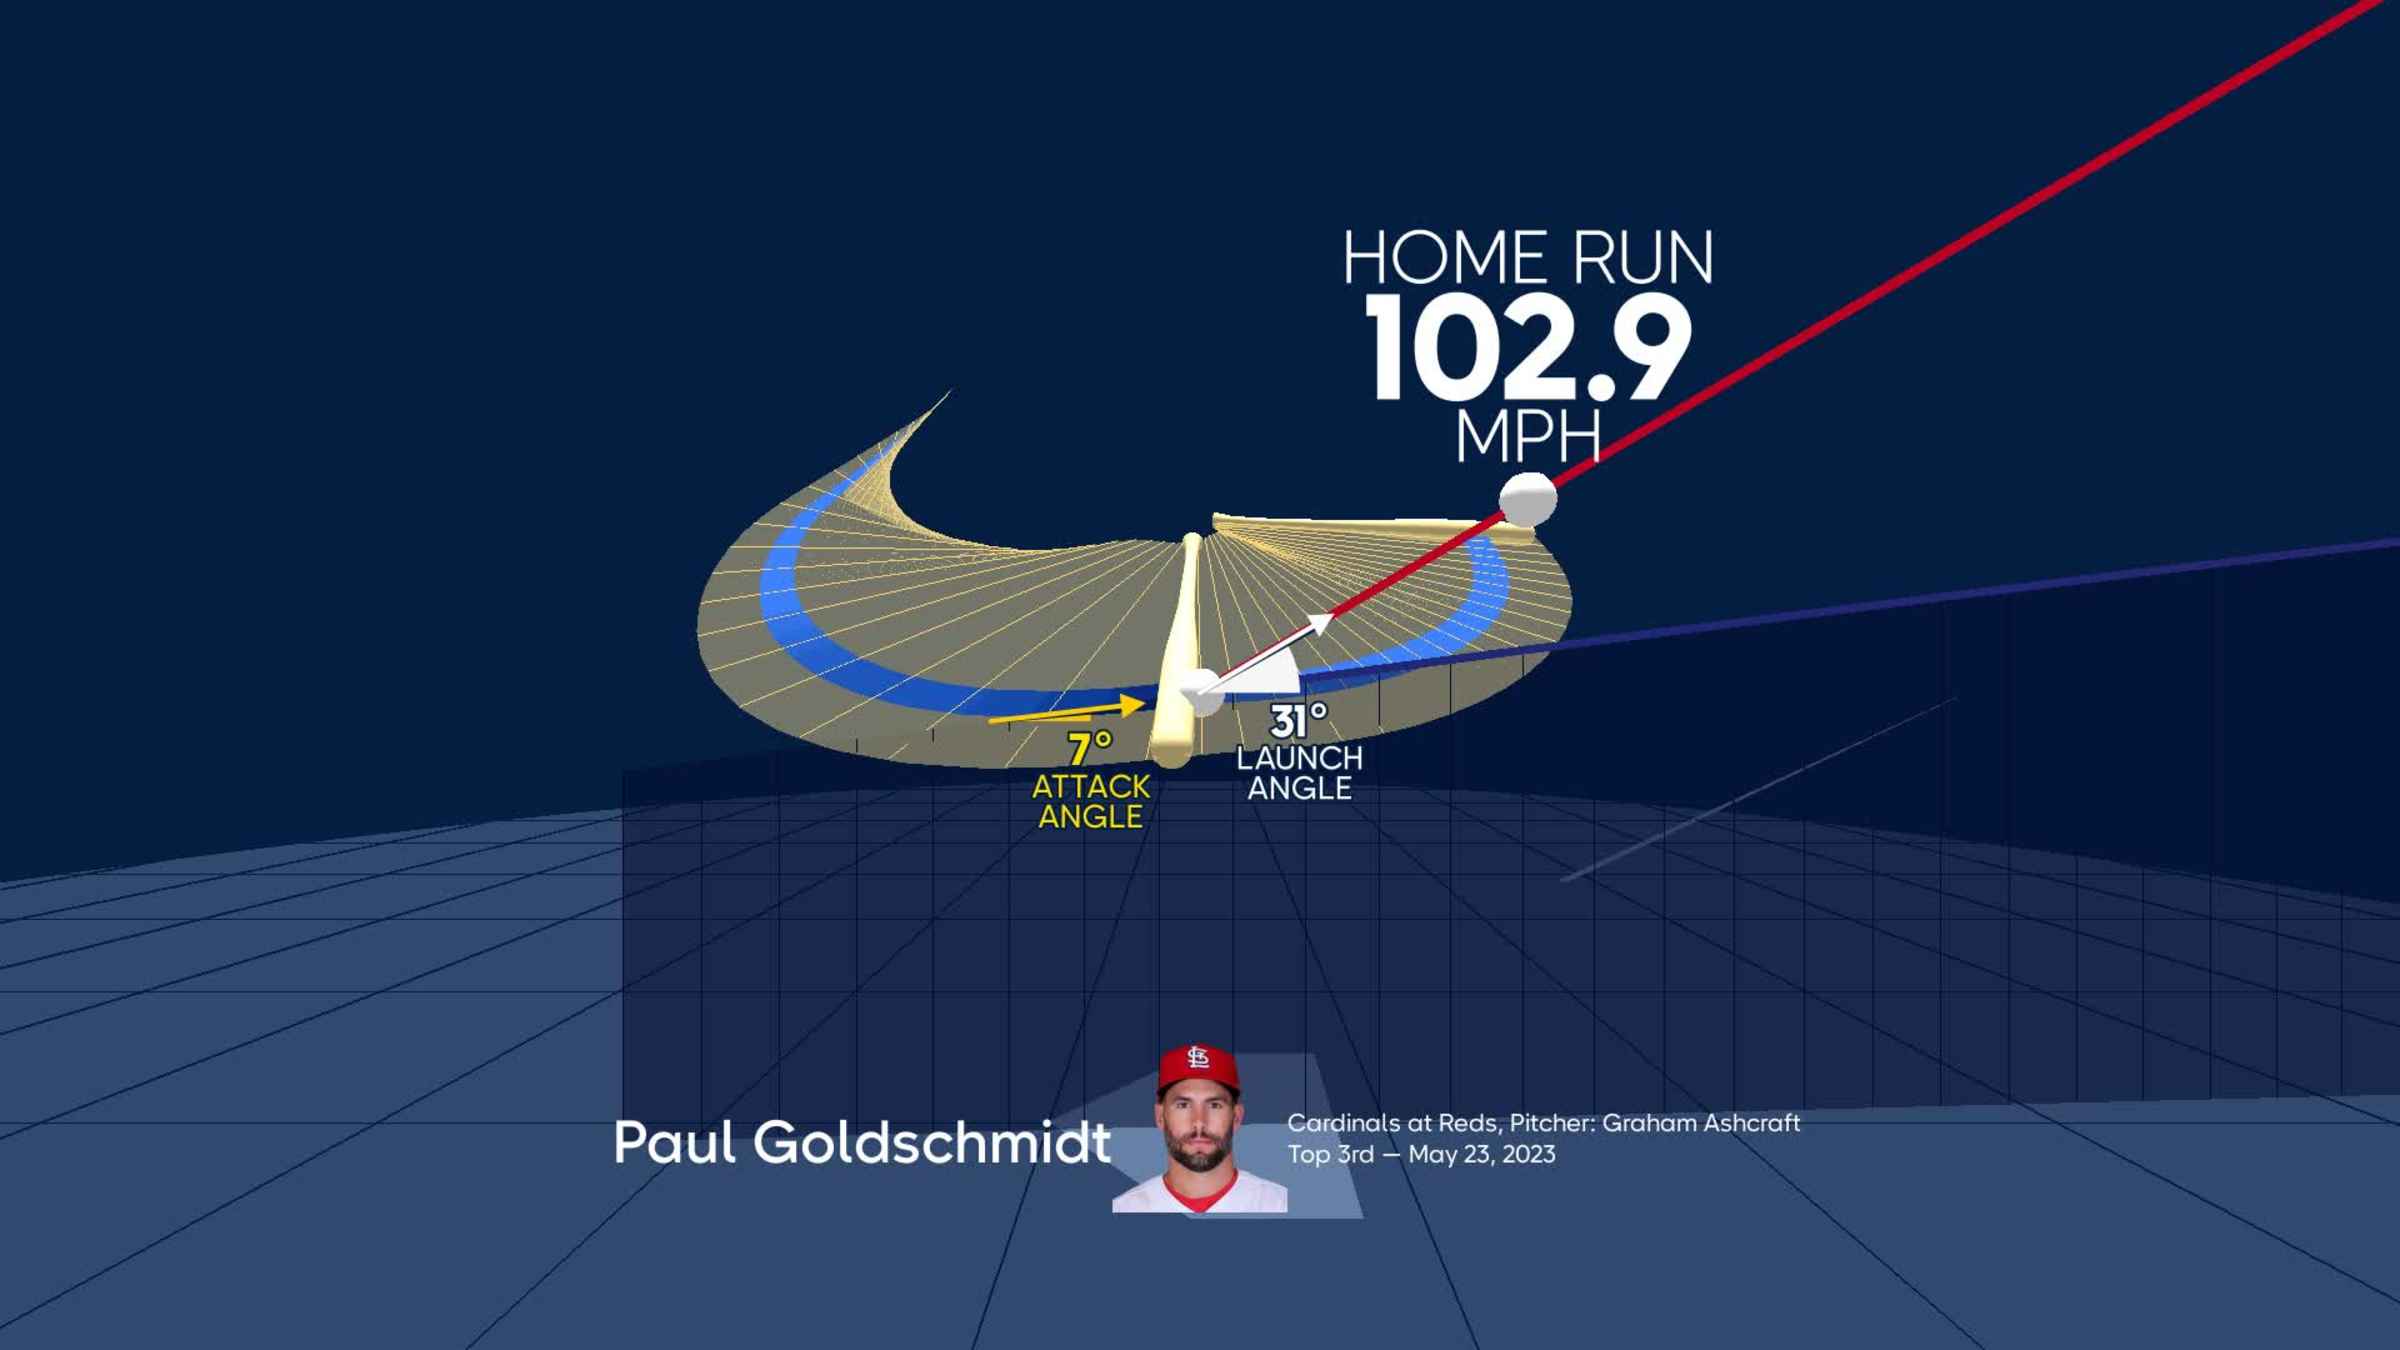 Visualizing Paul Goldschmidt's swing using bat tracking technology